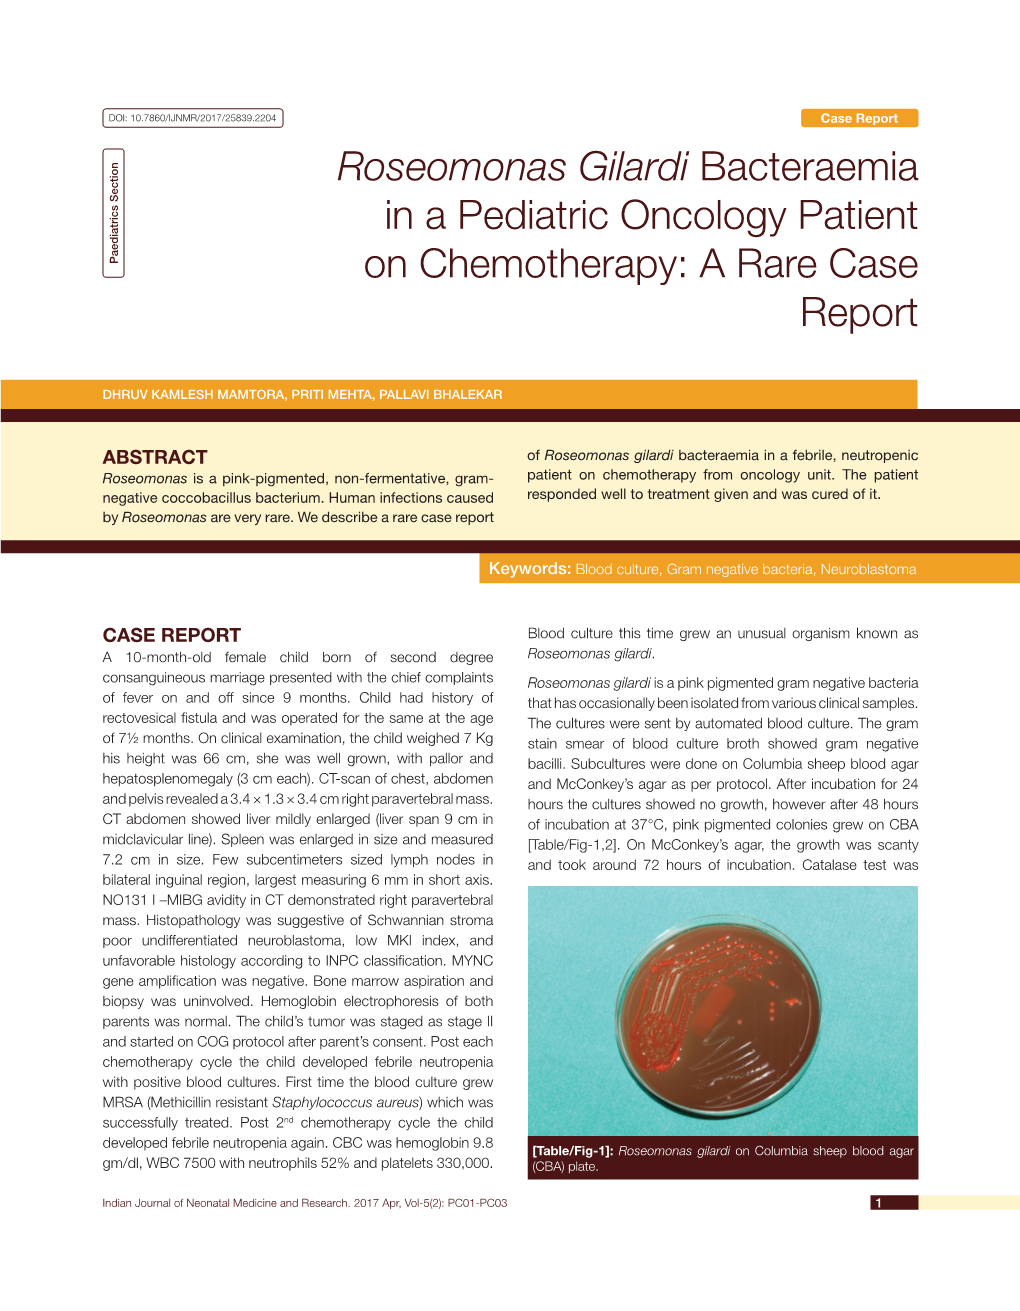 Roseomonas Gilardi Bacteraemia in a Pediatric Oncology Patient